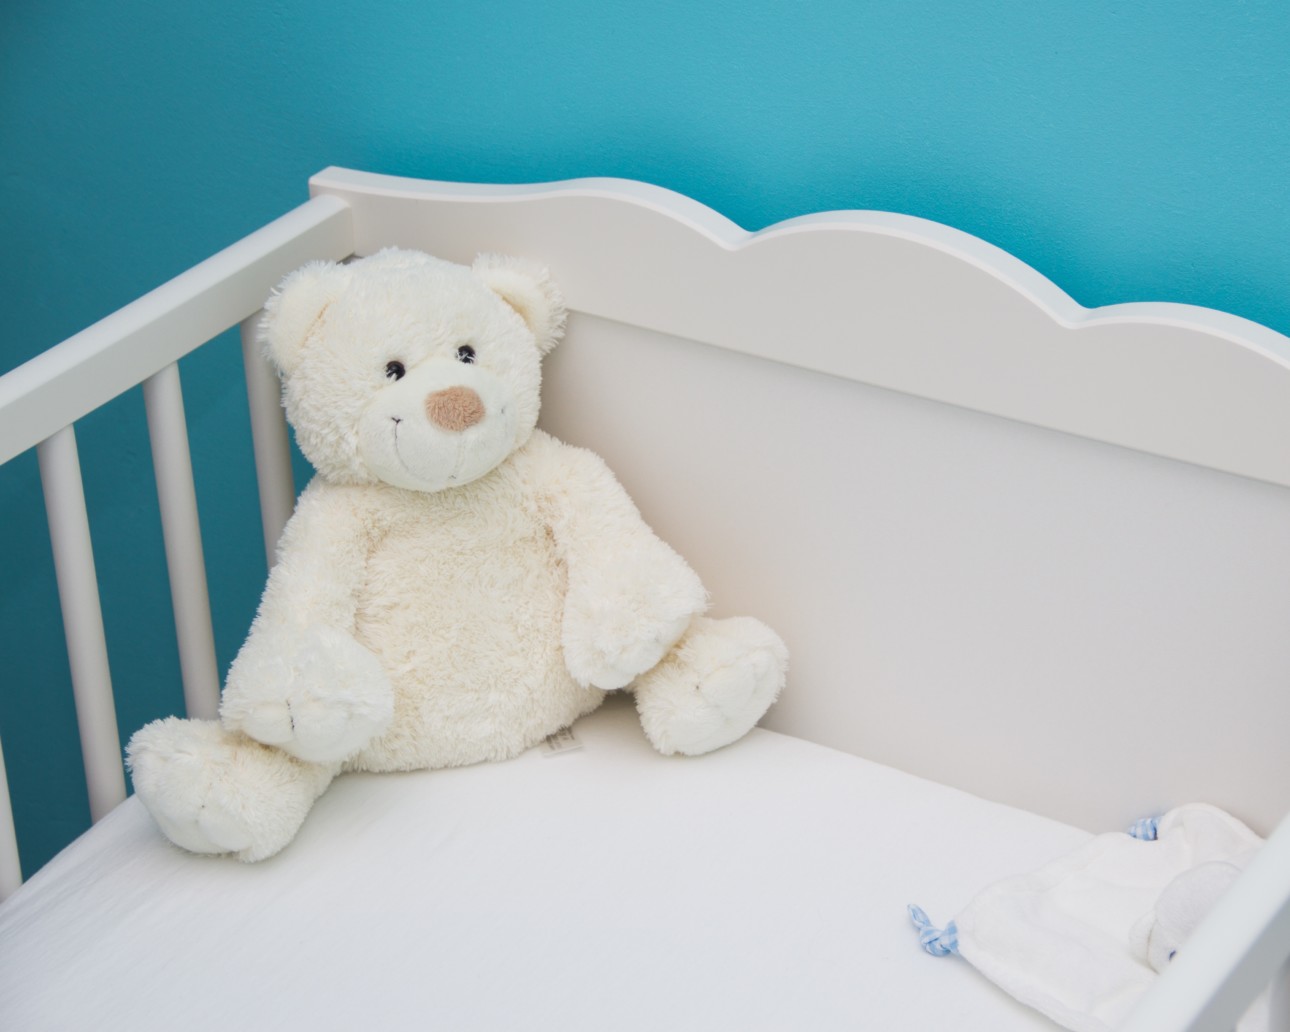 Baby crib - infertility awareness